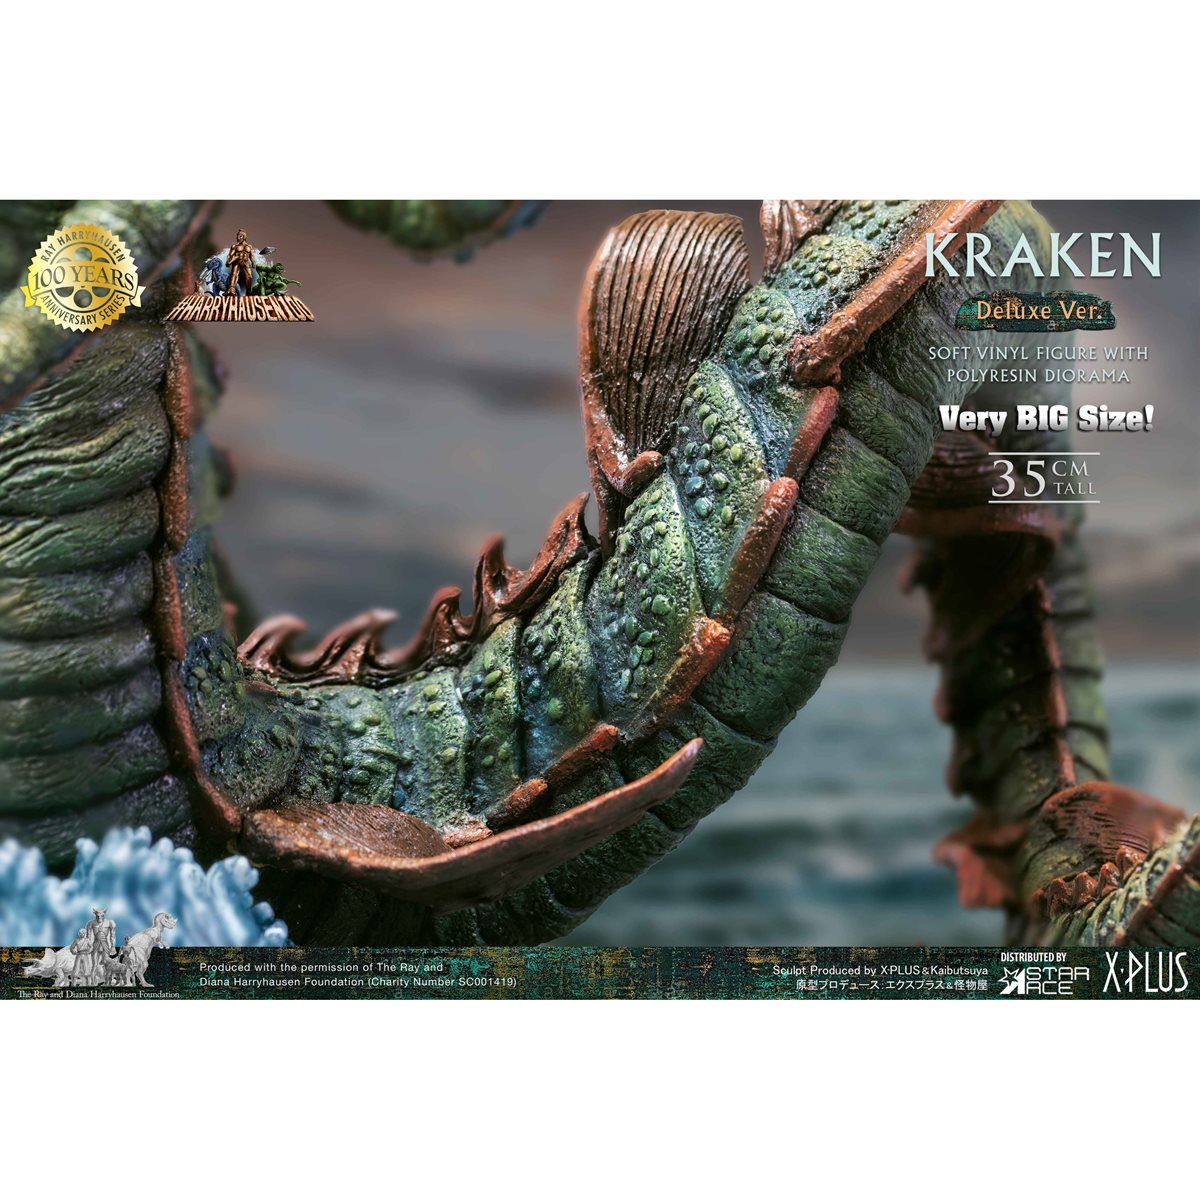 Clash of the Titans Gigantic Series Kraken (Deluxe Ver.) Limited Edition  Soft Vinyl Statue